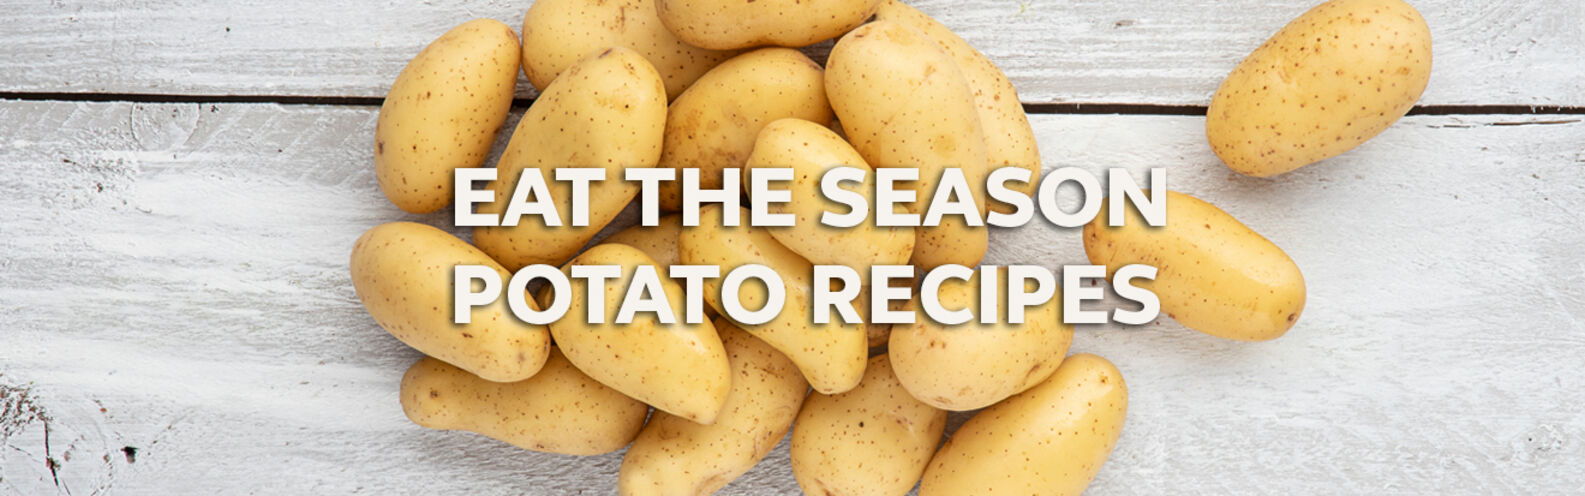 SuperValu Fruit and Veg Eat the Season Potato